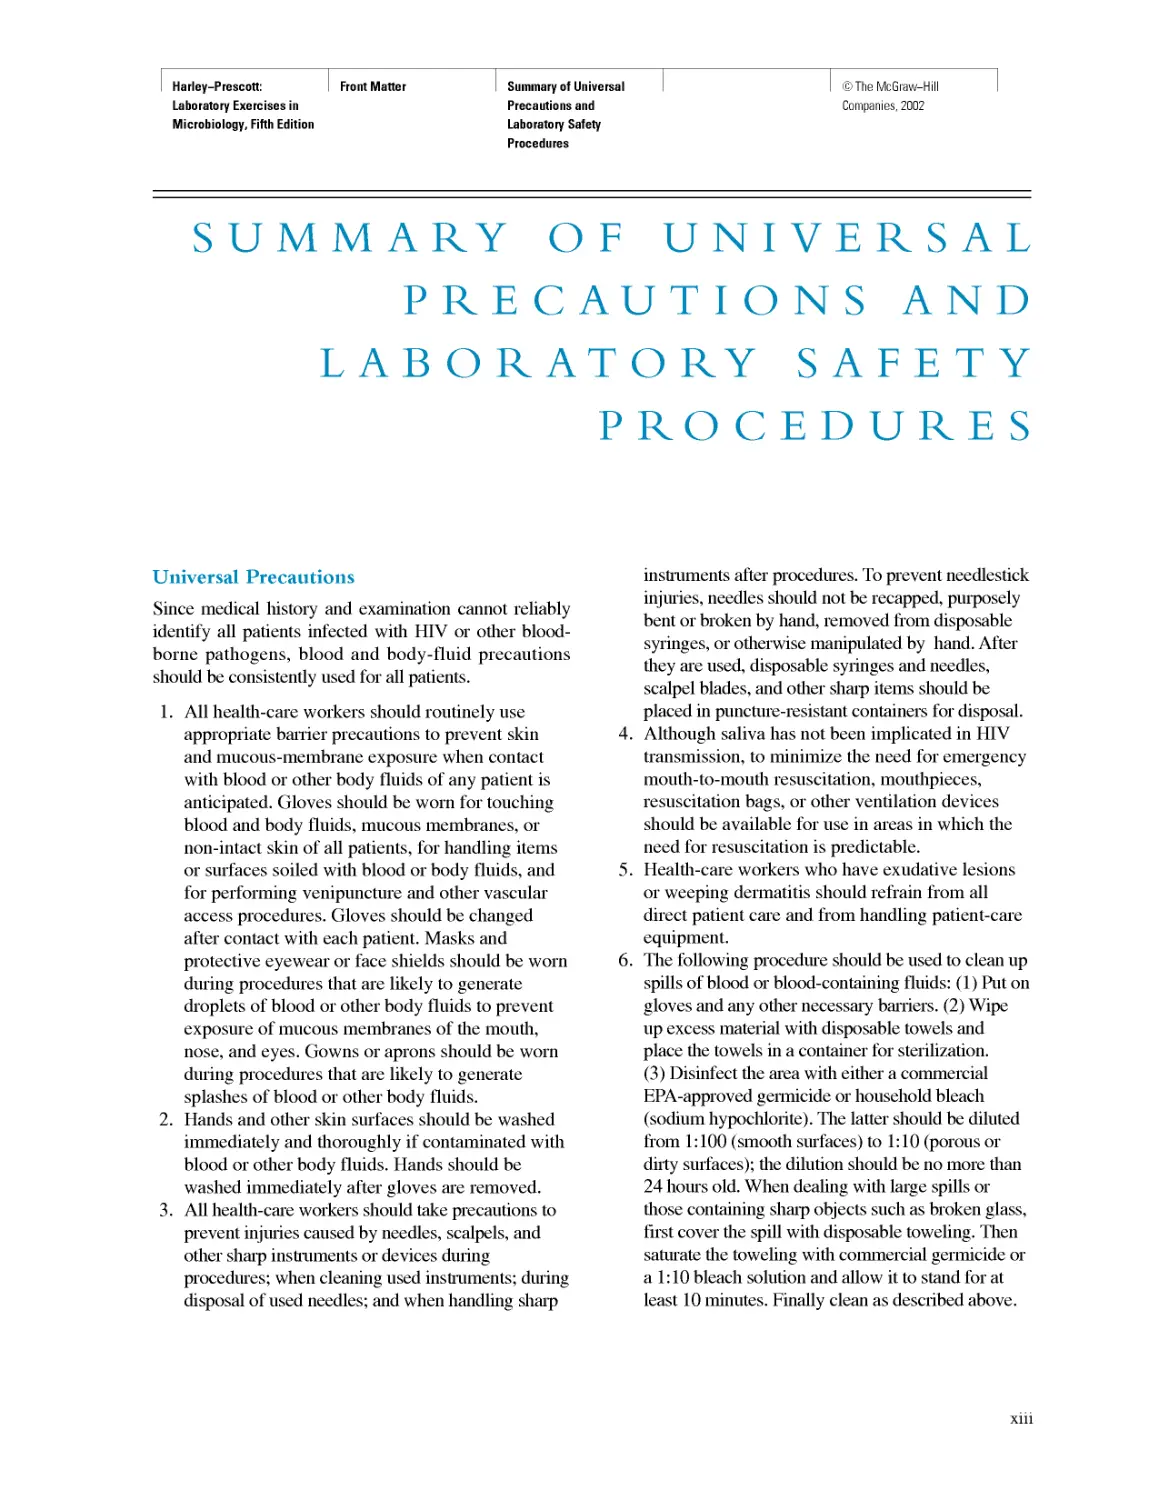 Summary of Universal Precautions and Laboratory Safety Procedures